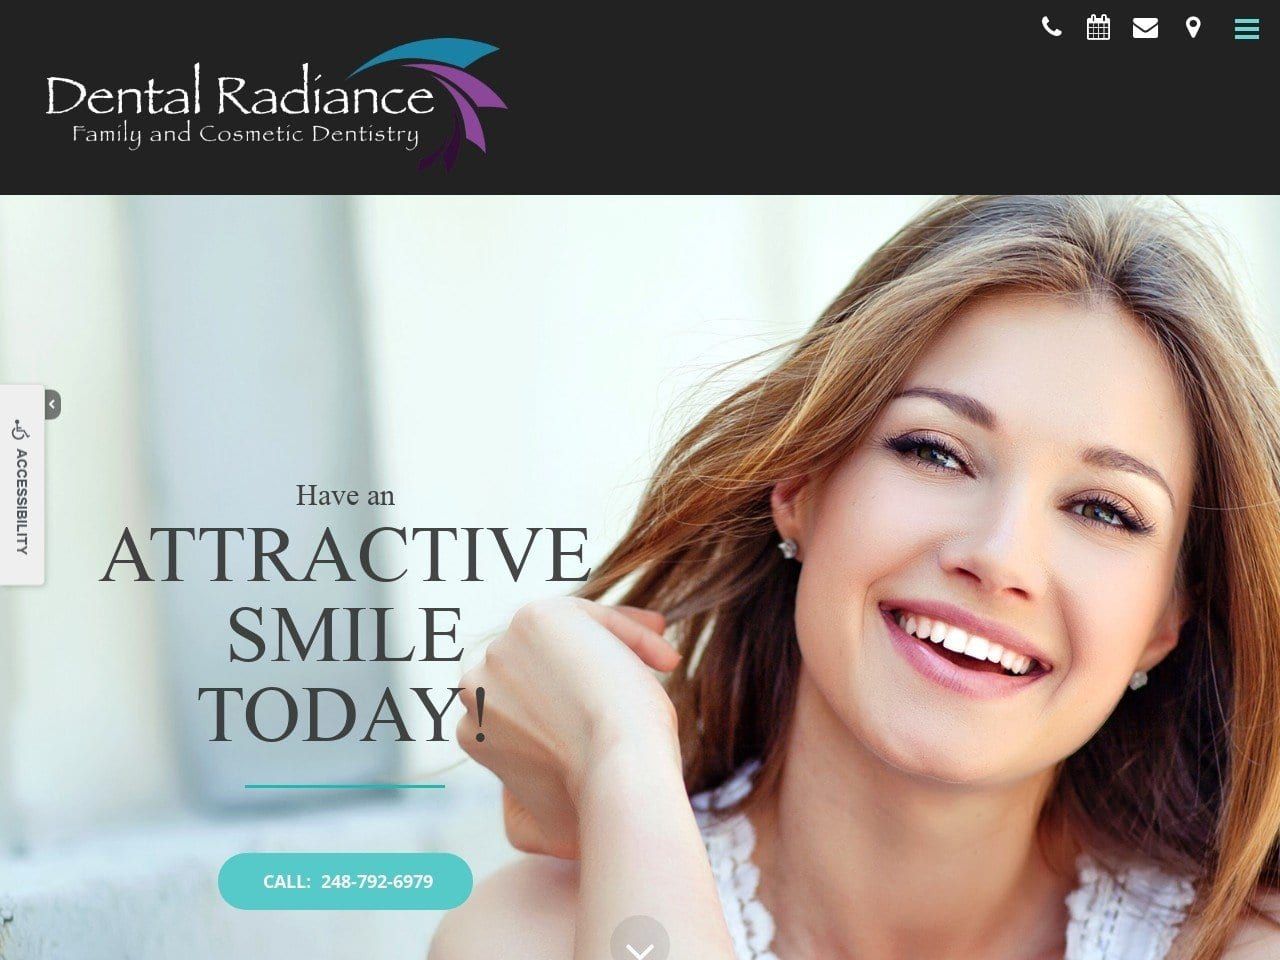 Dental Radiance Website Screenshot from midentalradiance.com